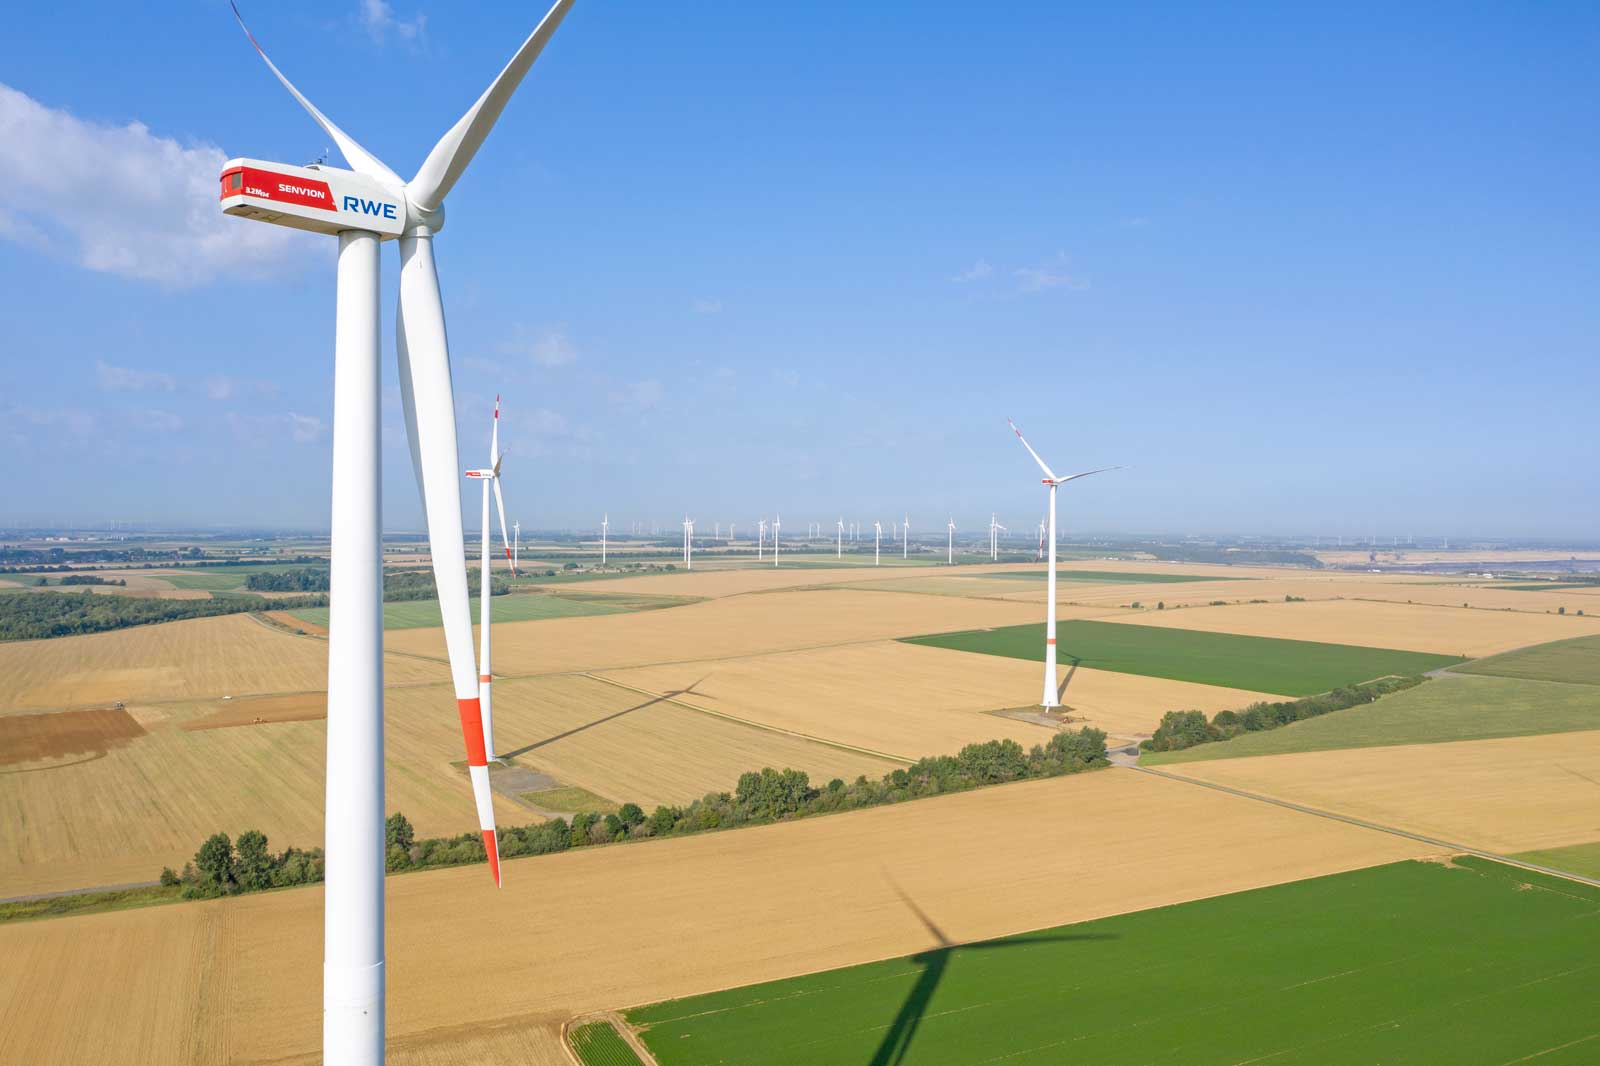 More wind power for Lower Saxony:  RWE is constructing Sandbostel-Bevern wind farm